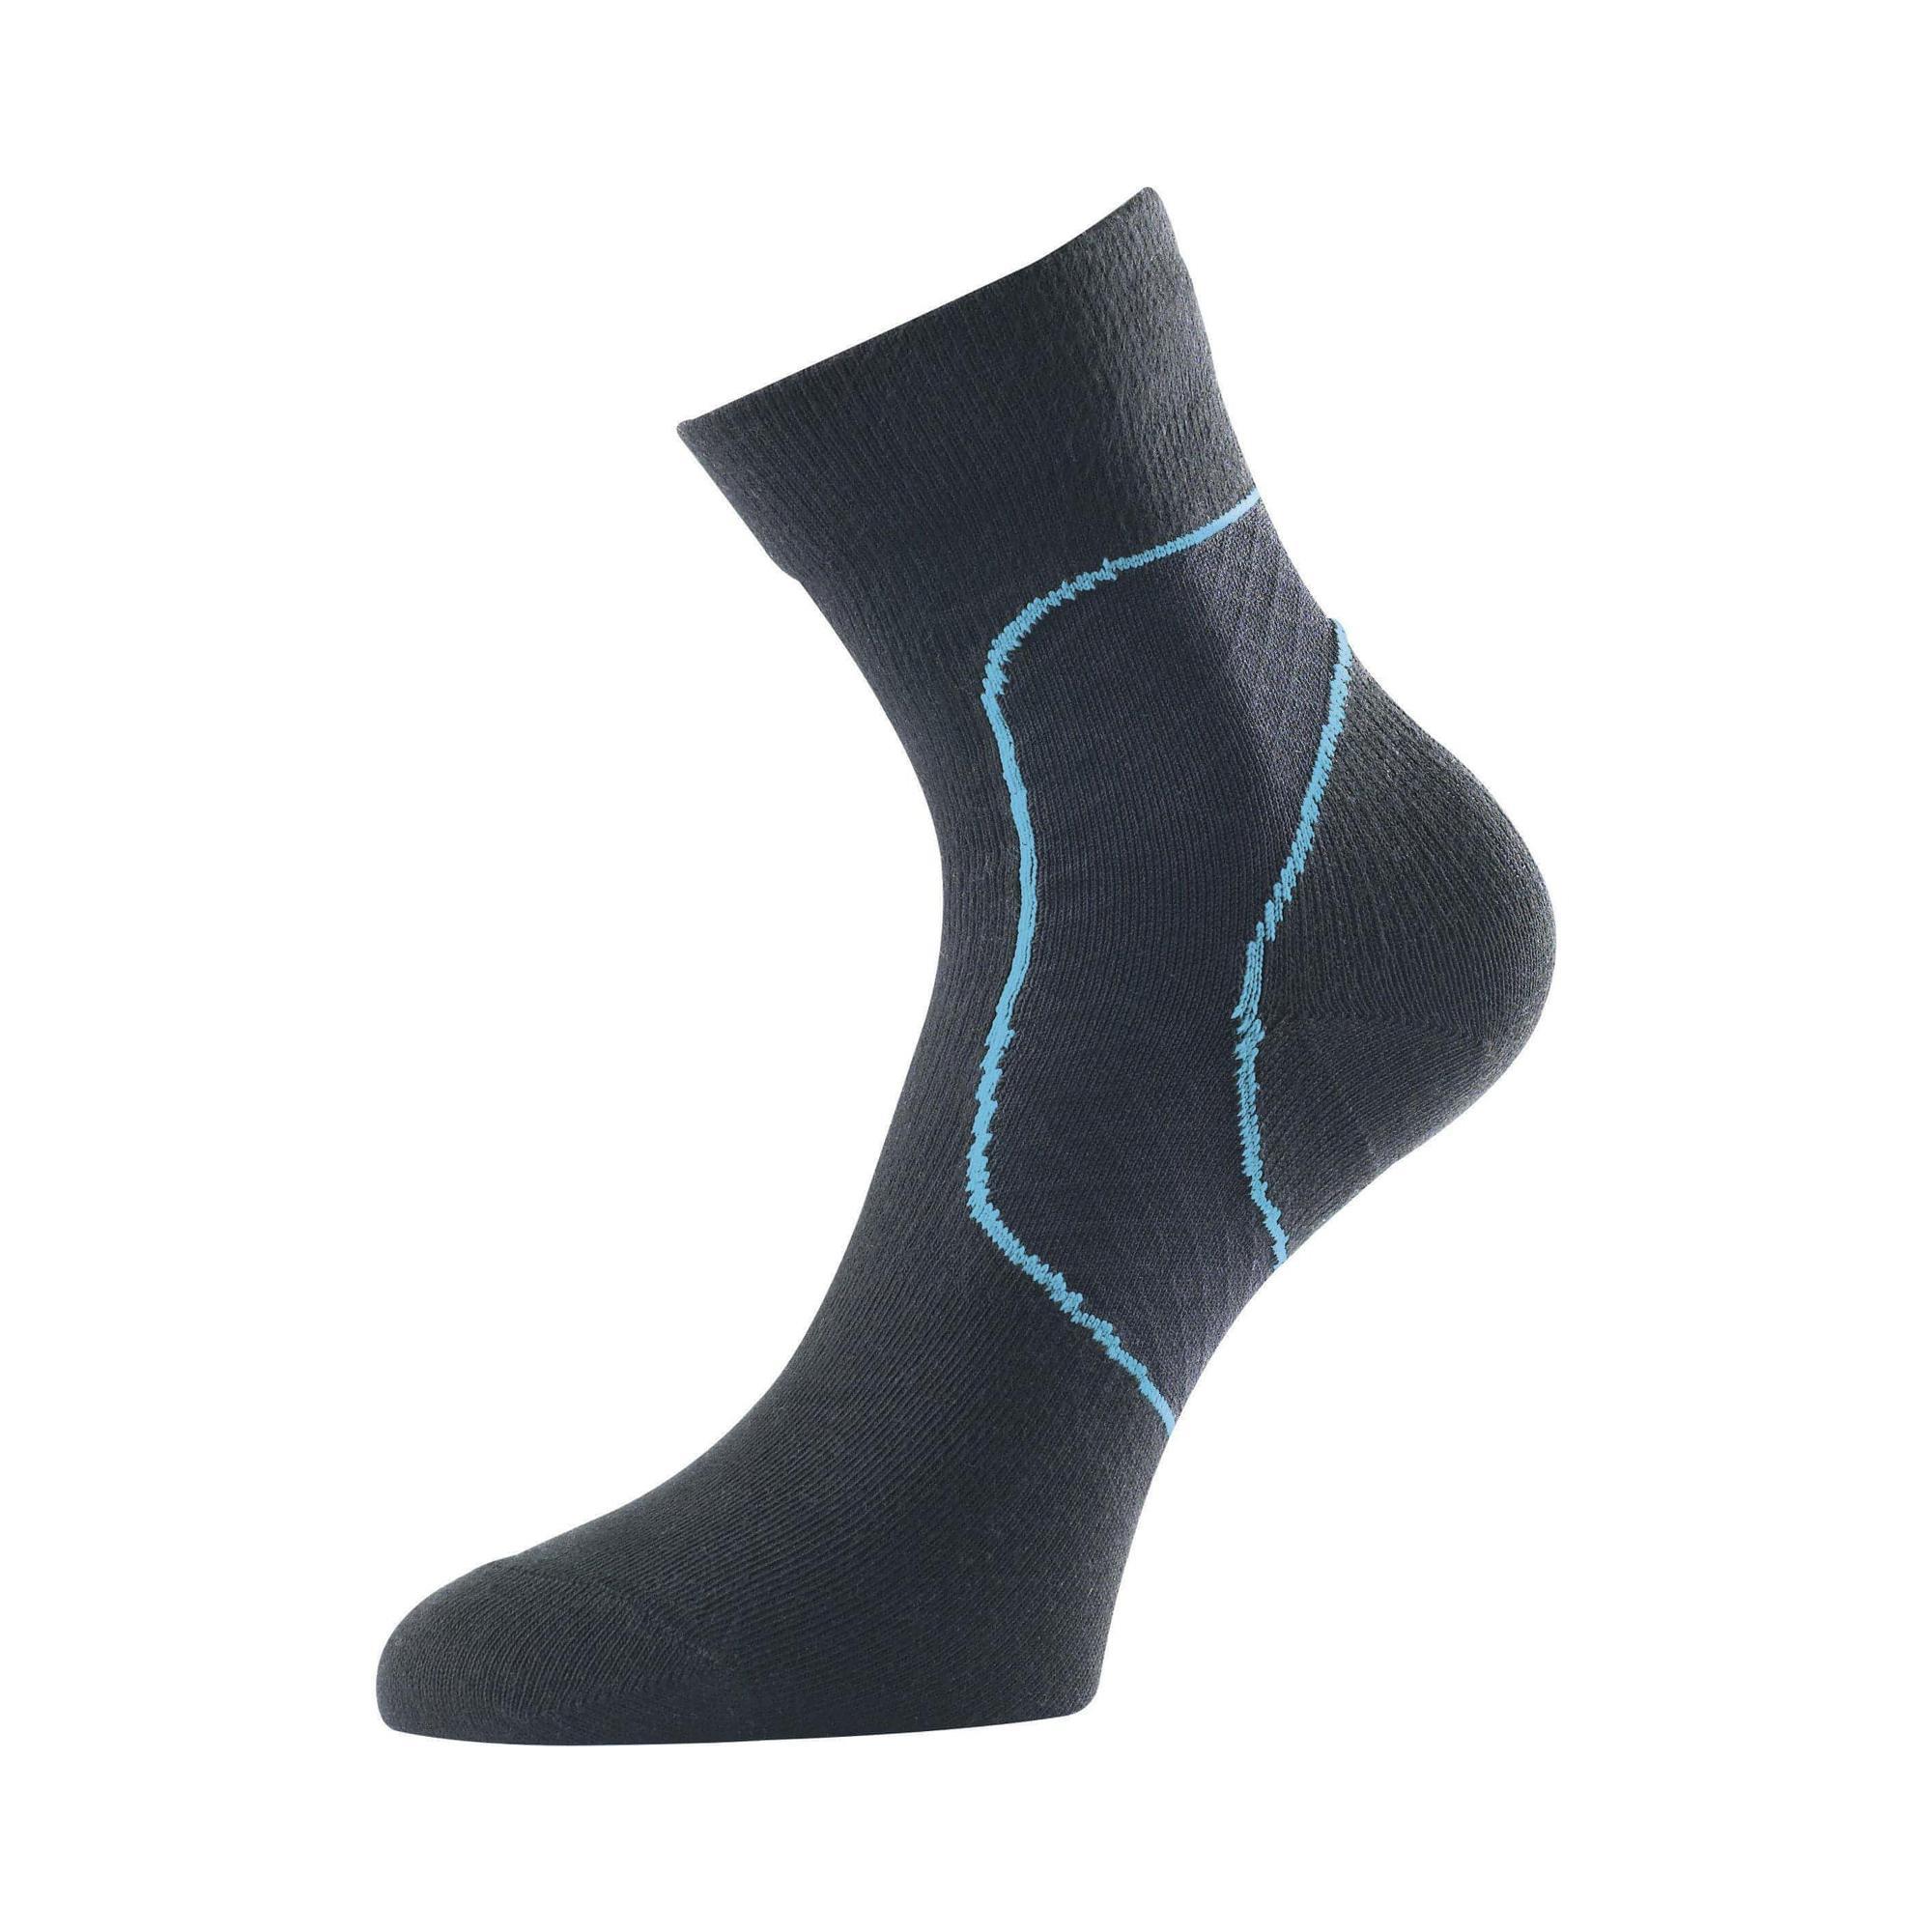 Ultimate Performance Unisex Adult Compression Socks (Black) (S)